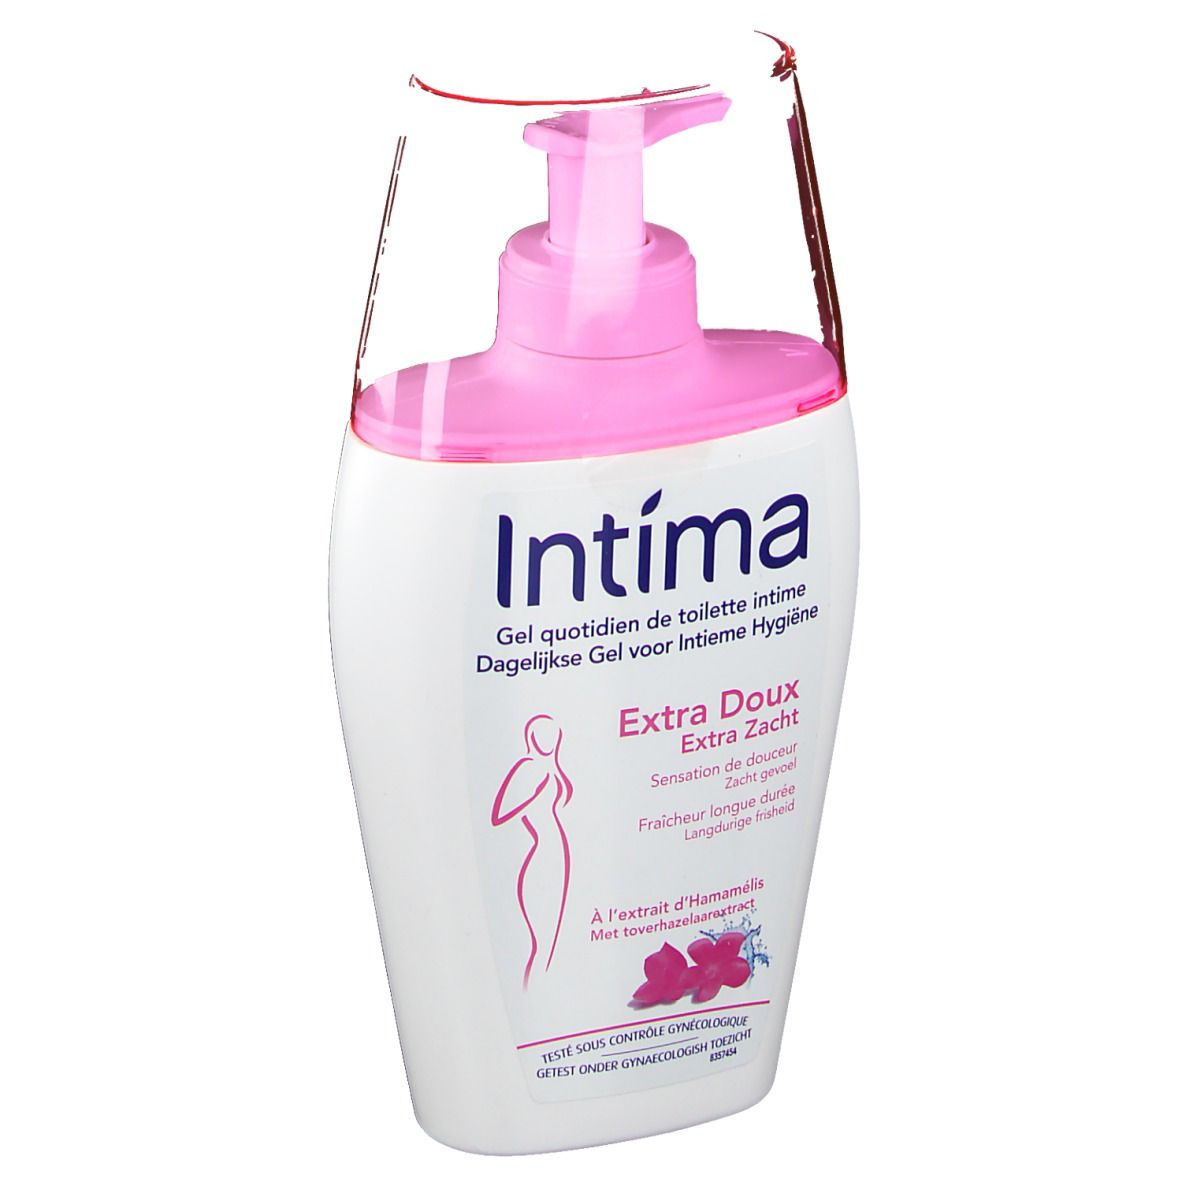 Gel extra doux de toilette intime - Intima - 240 ml